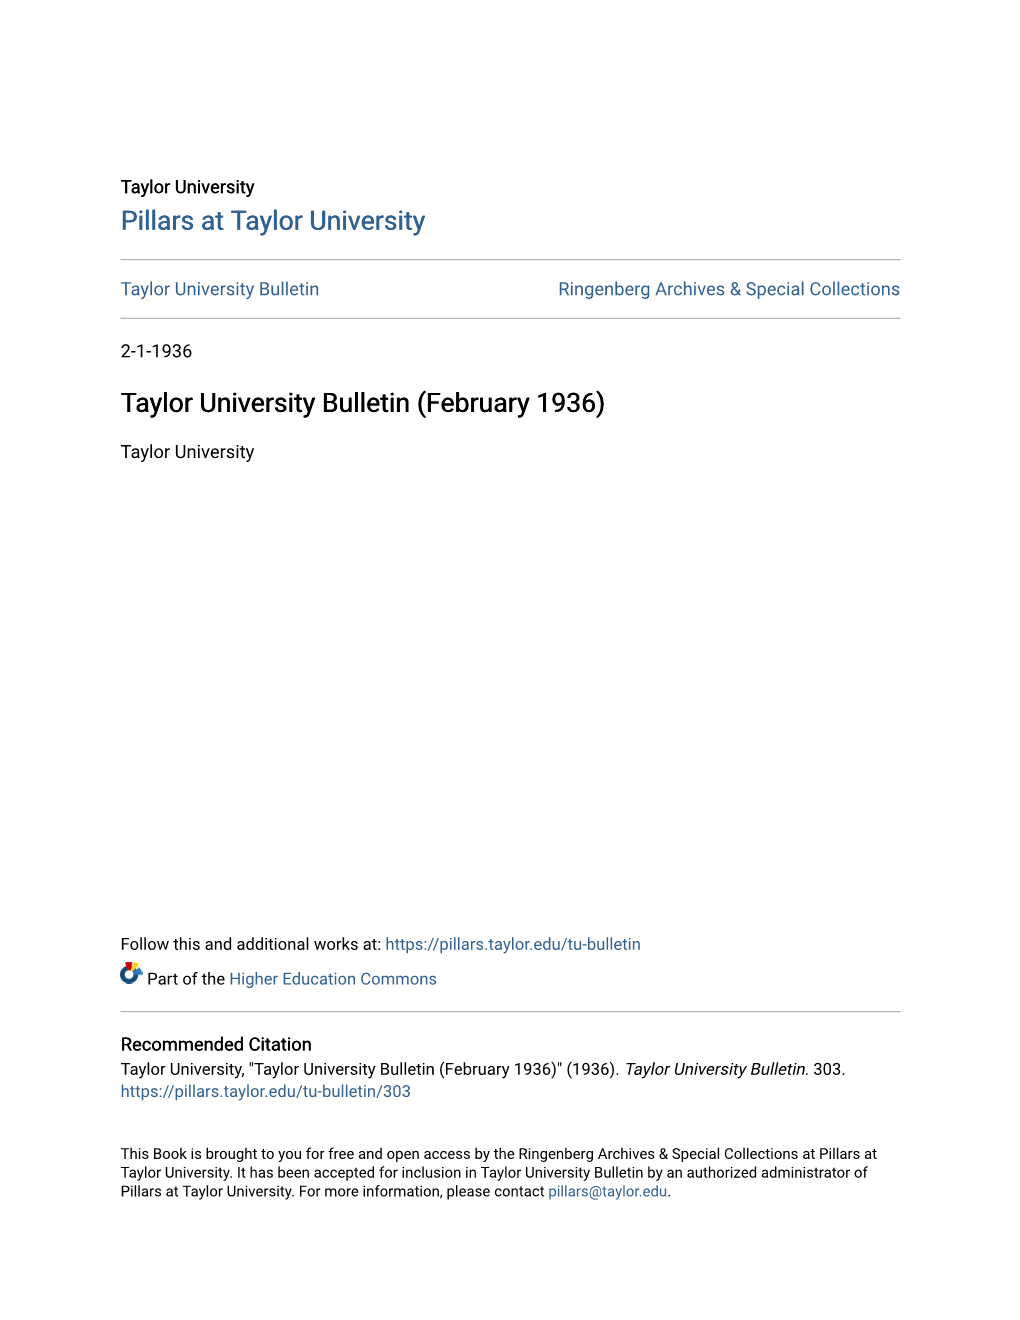 Taylor University Bulletin (February 1936)